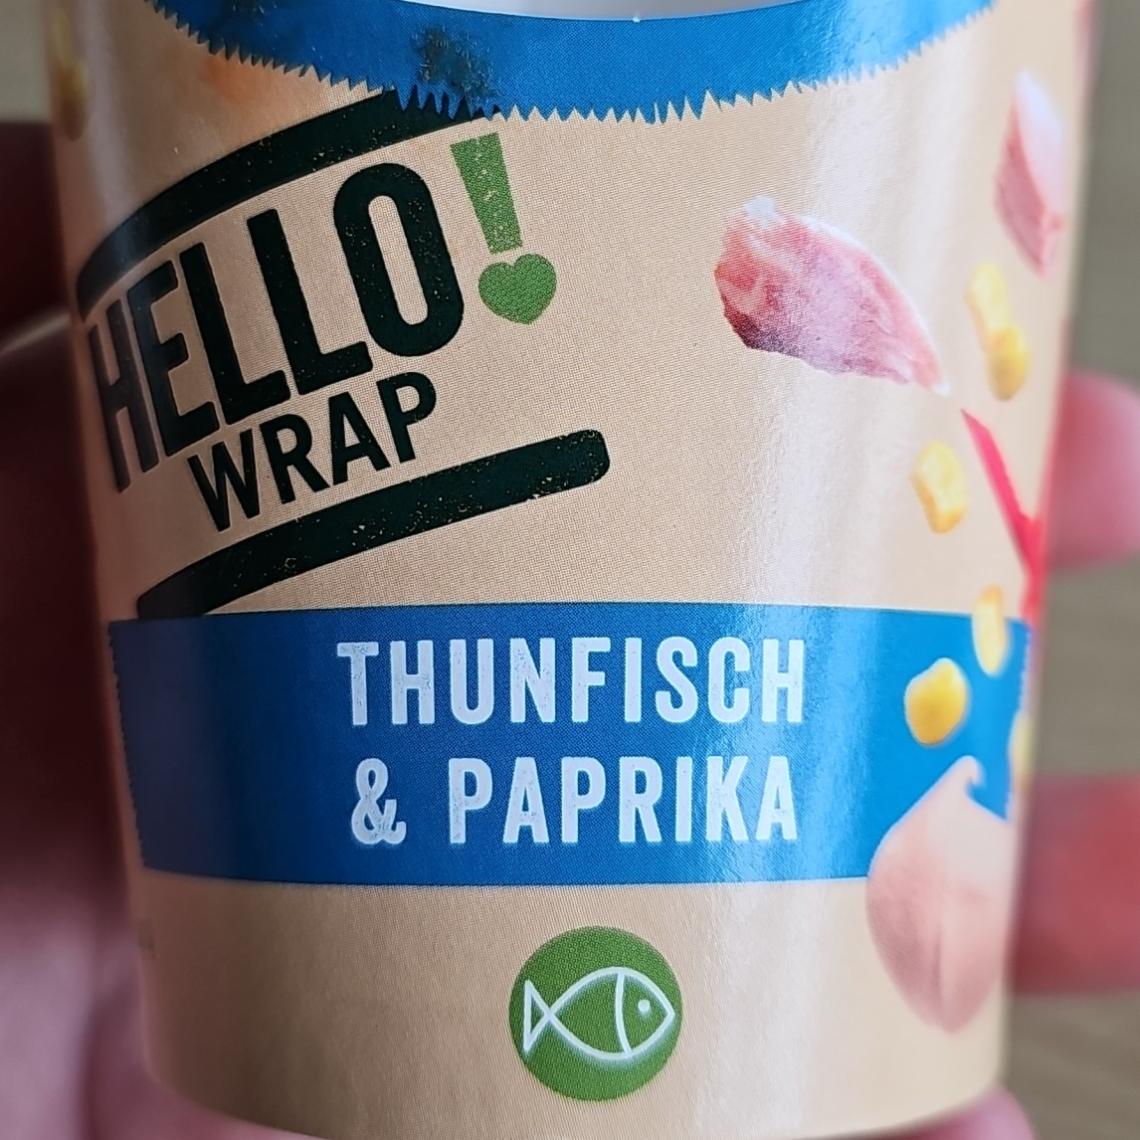 Fotografie - Thunfisch & Paprika Hello! Wrap